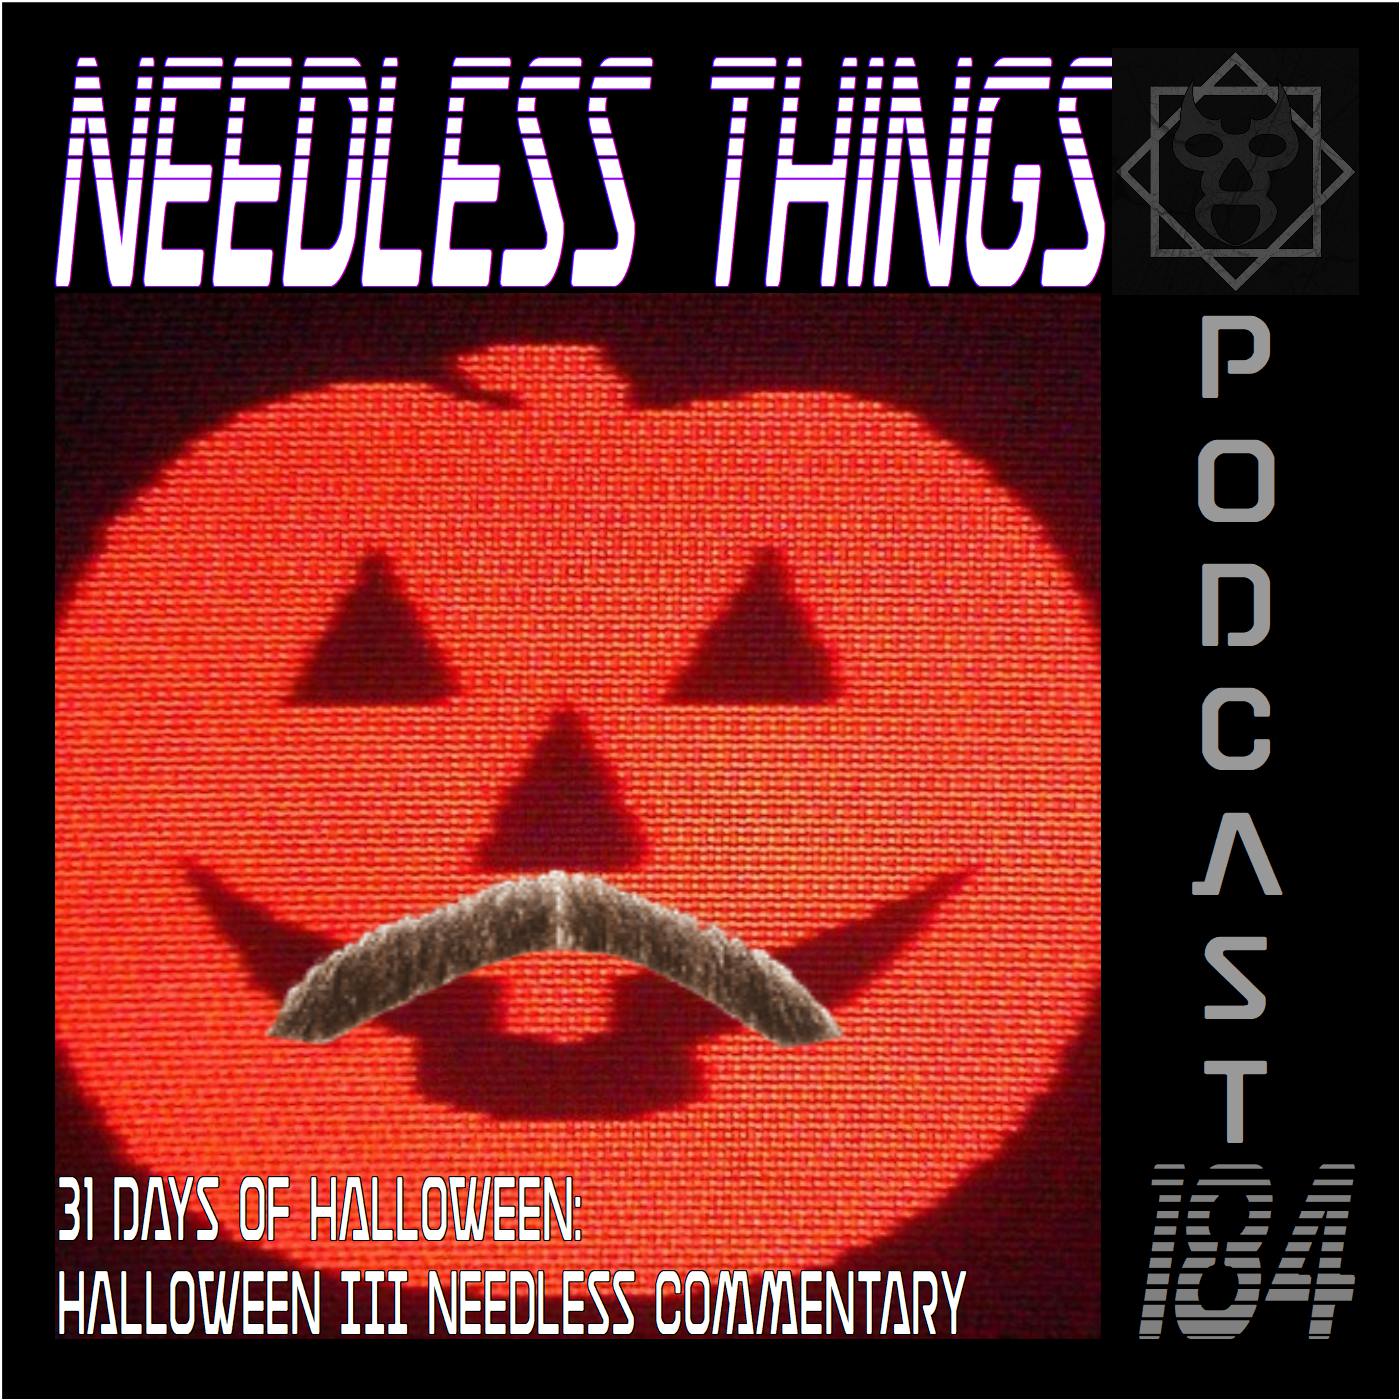 Needless Things Podcast 184 – 31 Days of Halloween: Halloween III Needless Commentary